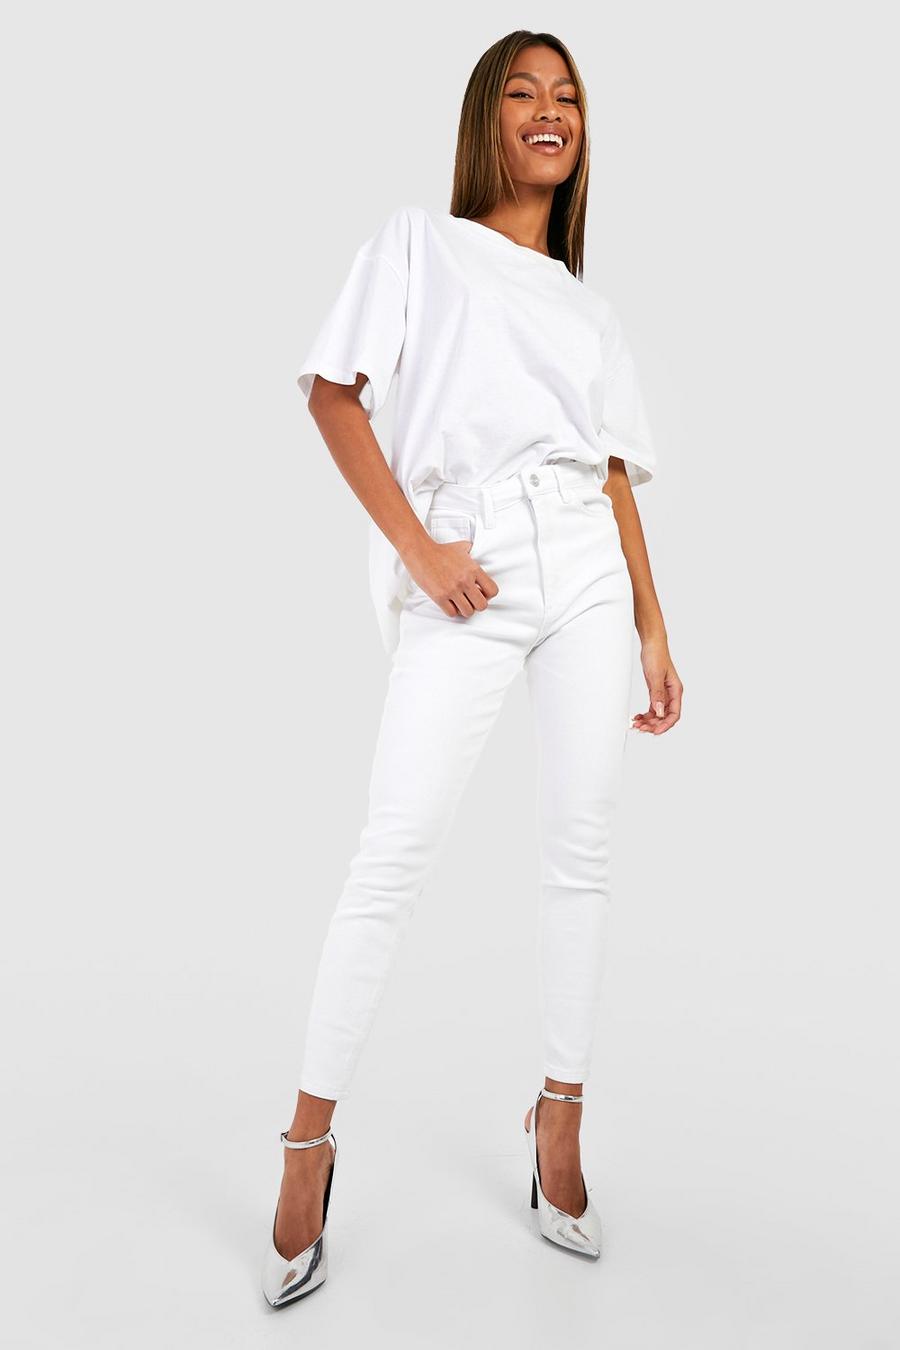 Women's White Jeans